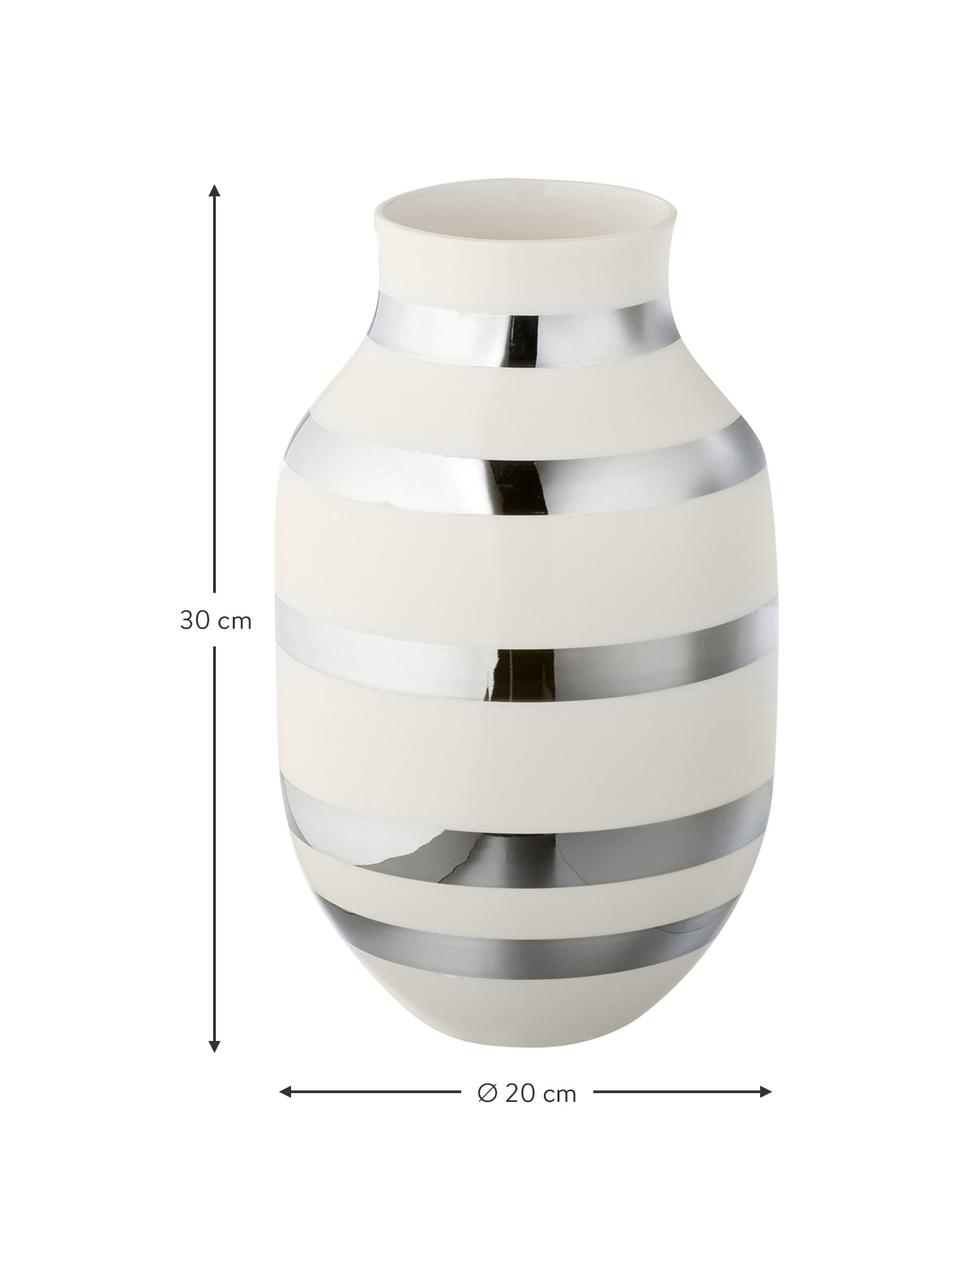 Grand vase design fait main Omaggio, Couleur argentée, brillant, blanc